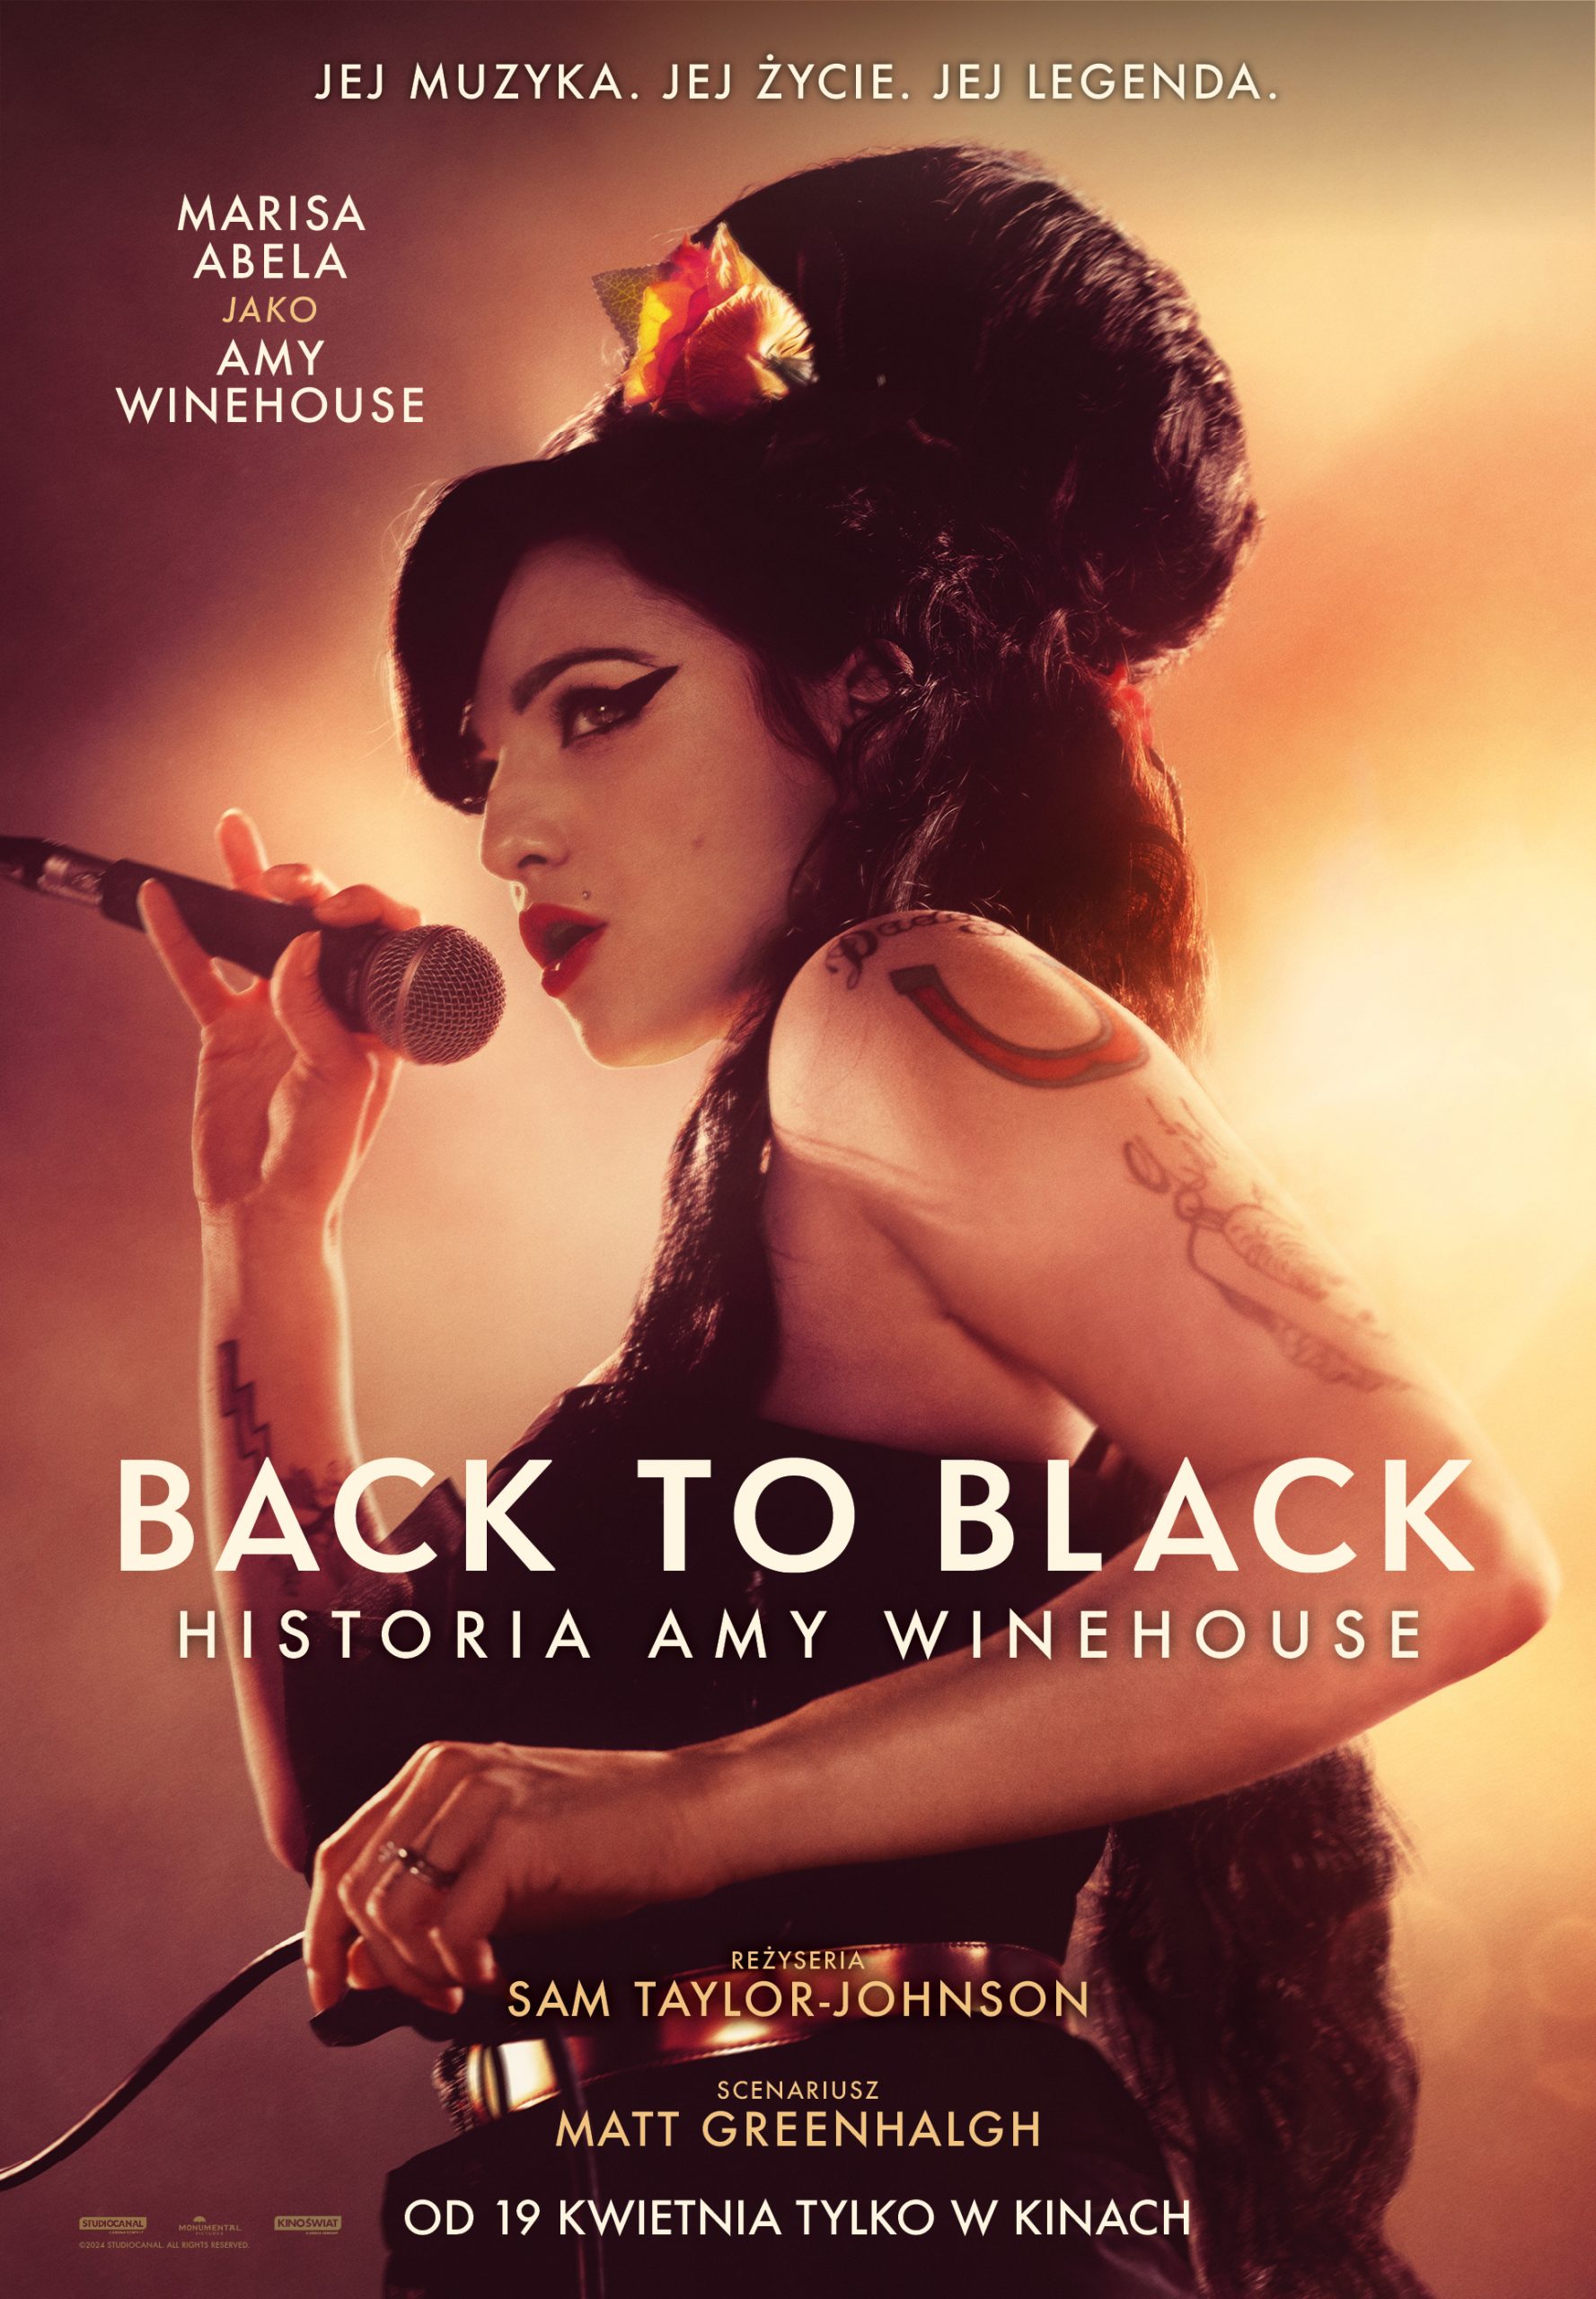 Plakat_Back_to_Black_Historia_Amy_Winehouse_Kino_Swiat (1)